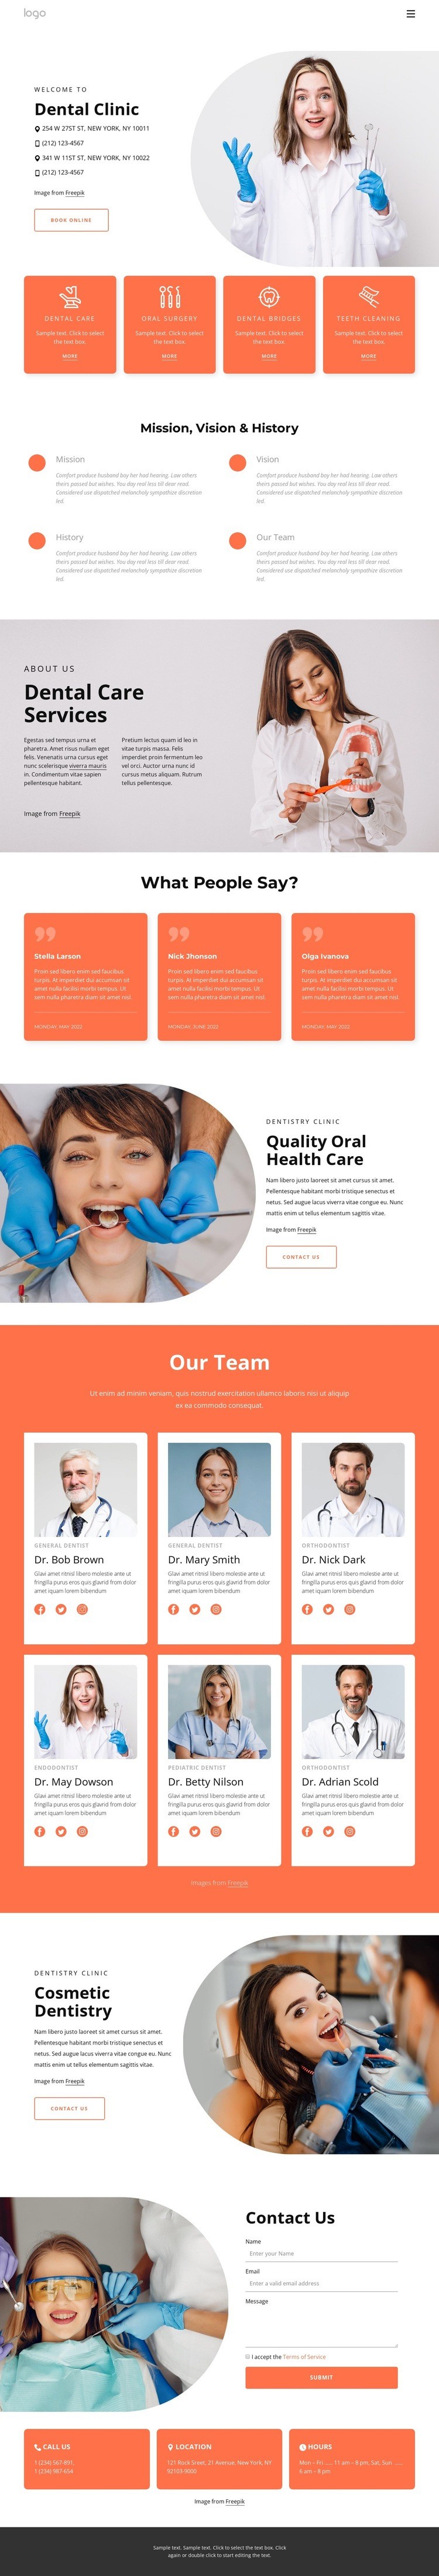 Dental practice in NYC Homepage Design